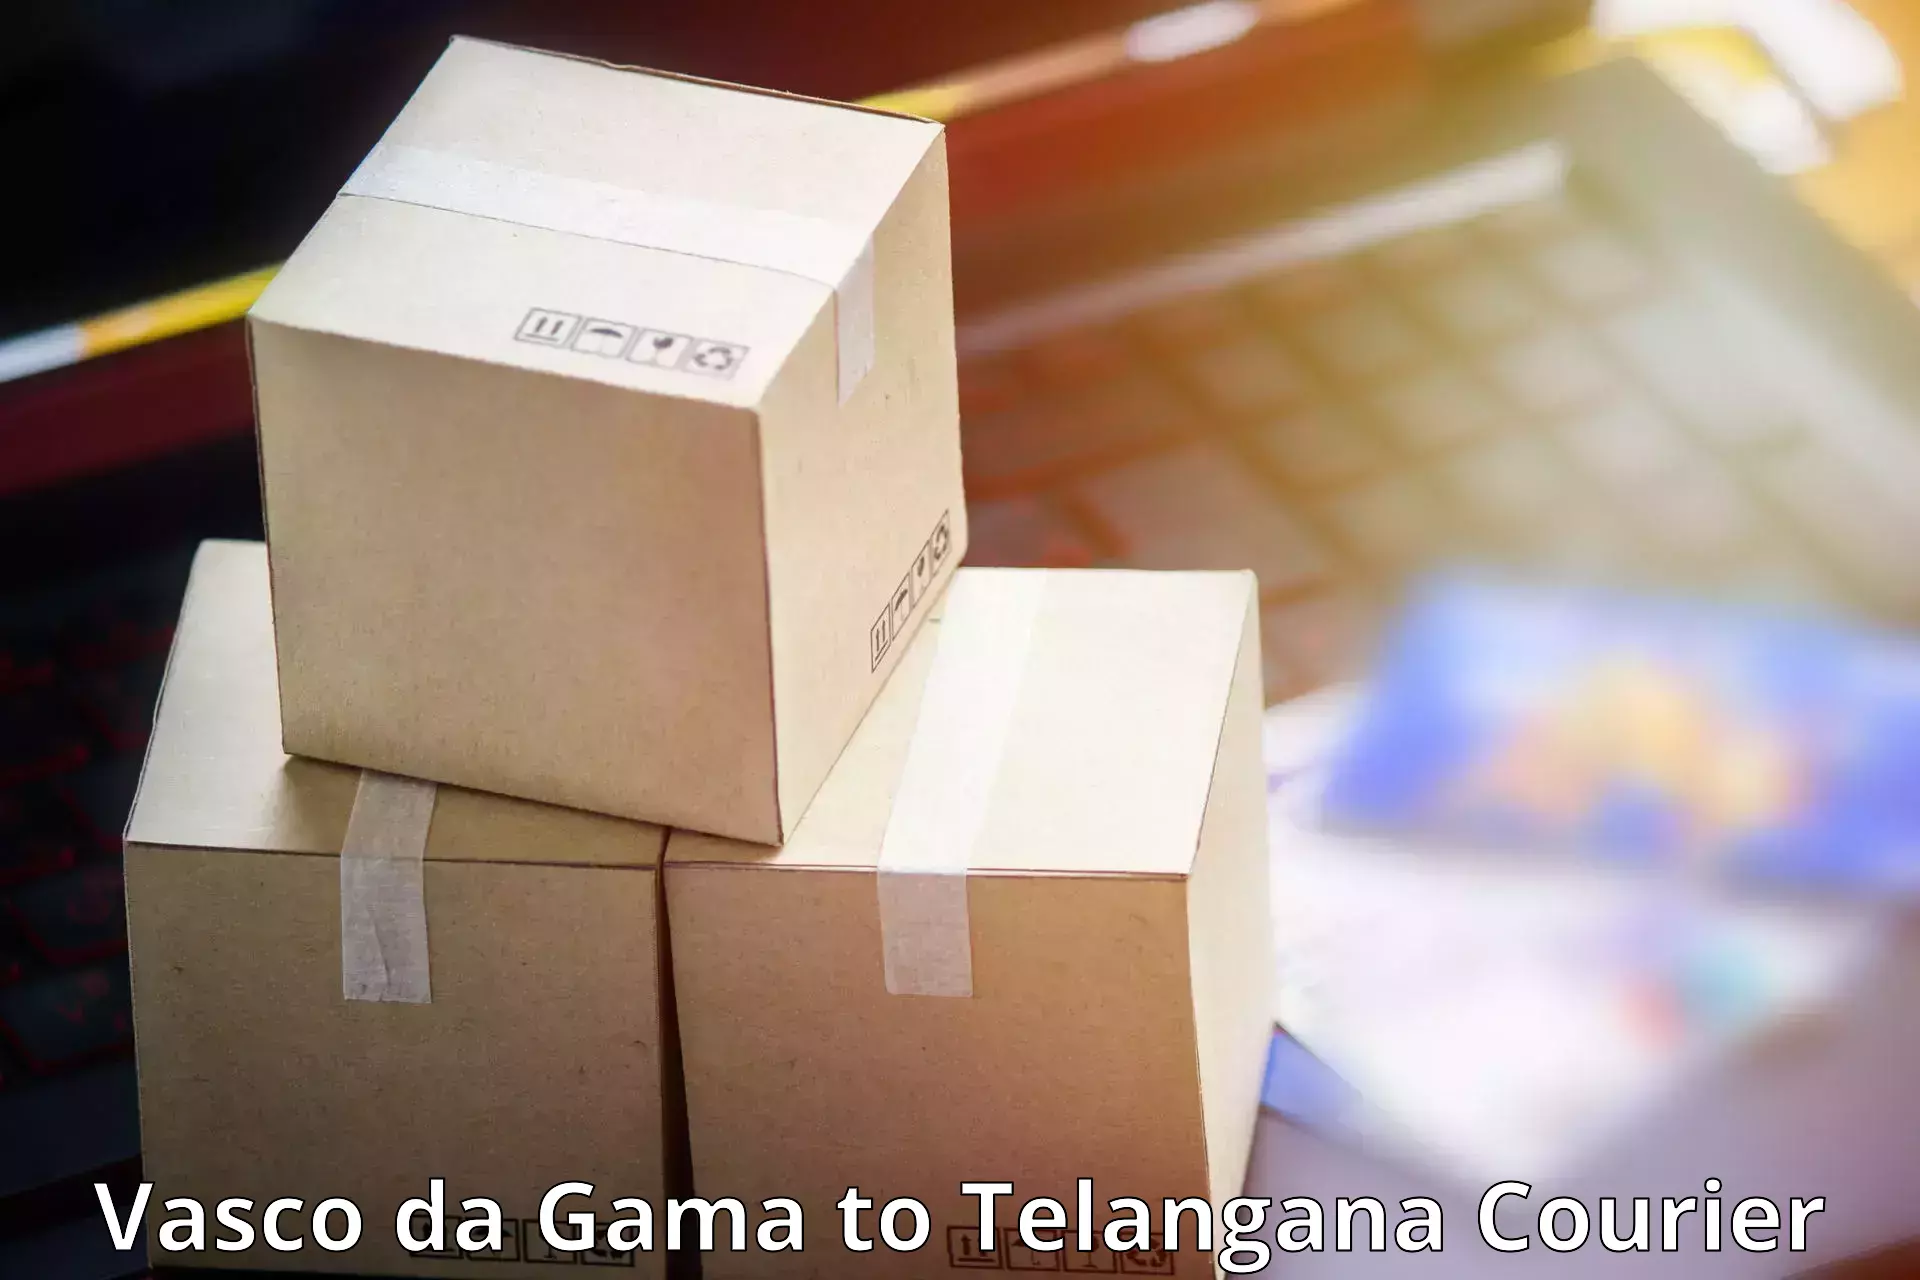 On-call courier service Vasco da Gama to Gangadhara